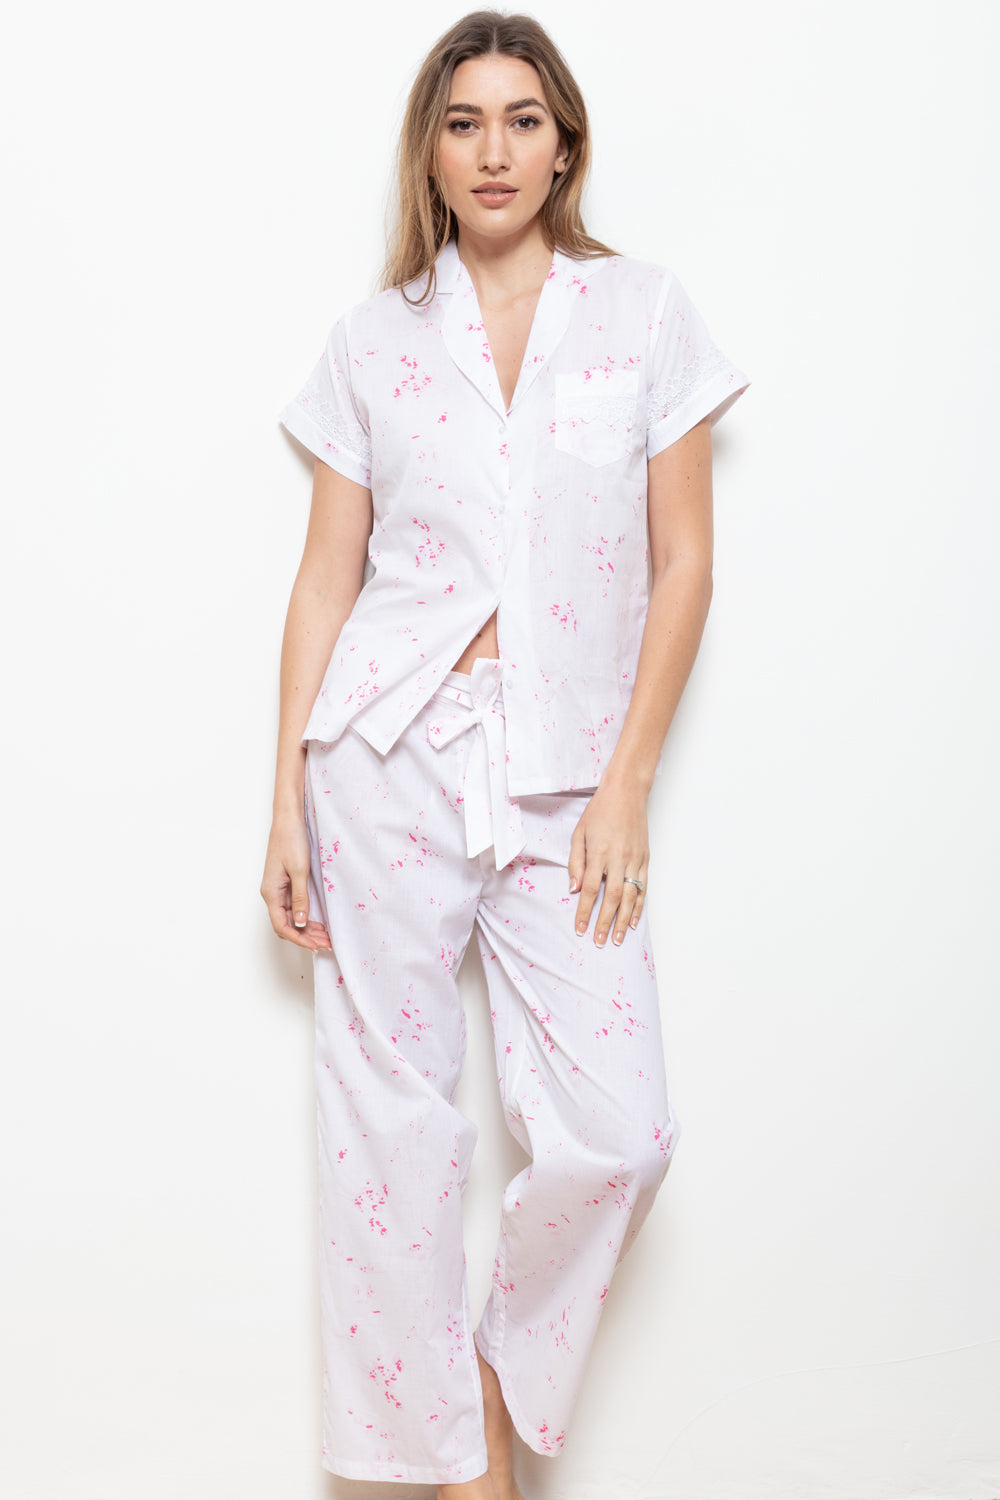 Cottonreal 'Yoloti' Pretty Pink Floral & White 100% Cotton Pyjama Set